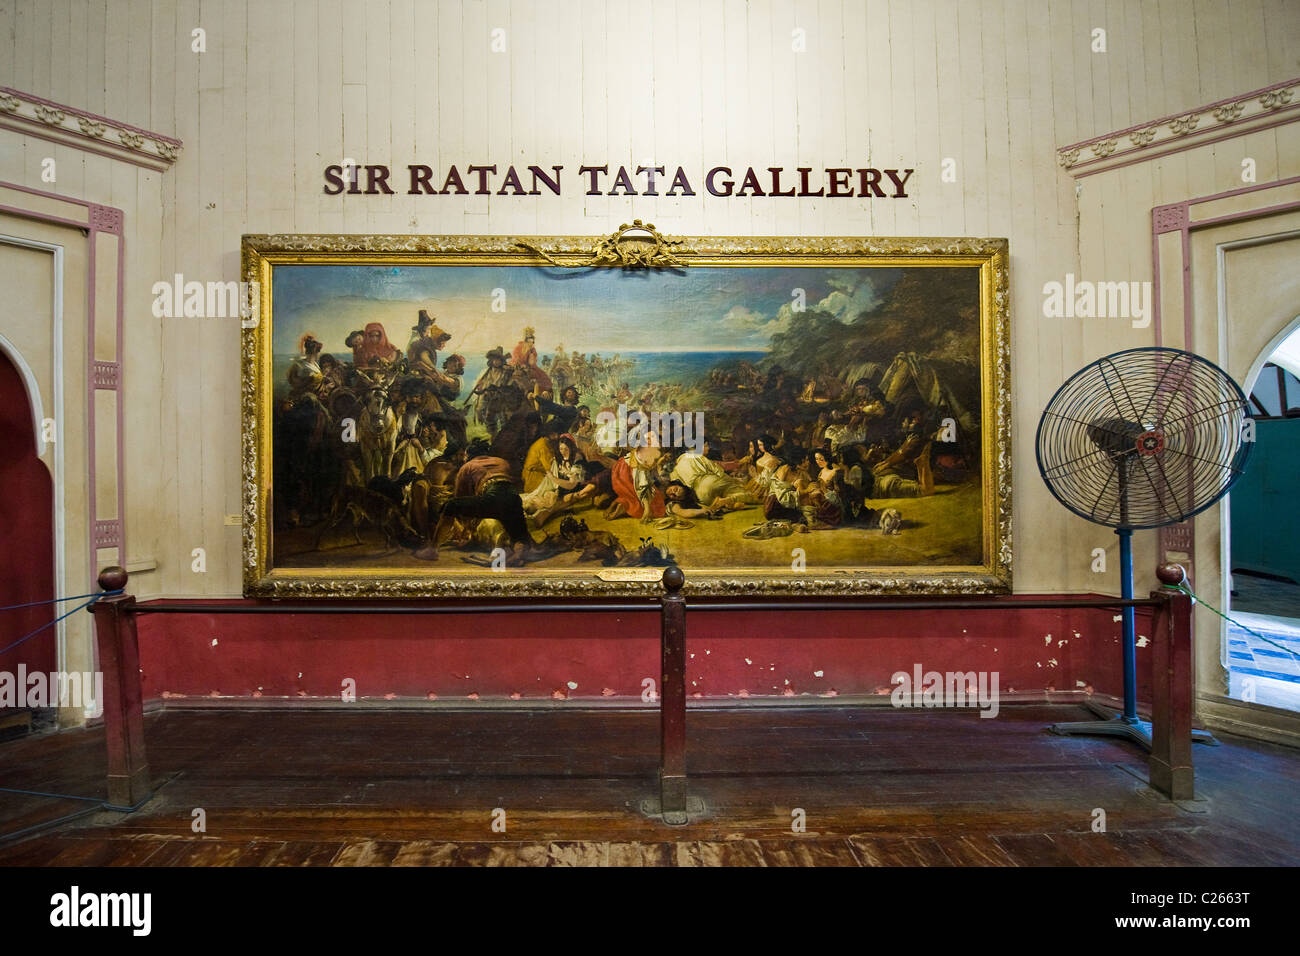 Sir Ratan Tata Gallery, Chhtrapati Shivaji Maharaj Vastu Sangrahalaya, musée du Prince de Galles de l'ouest de l'Inde, Mumbai, Inde Banque D'Images